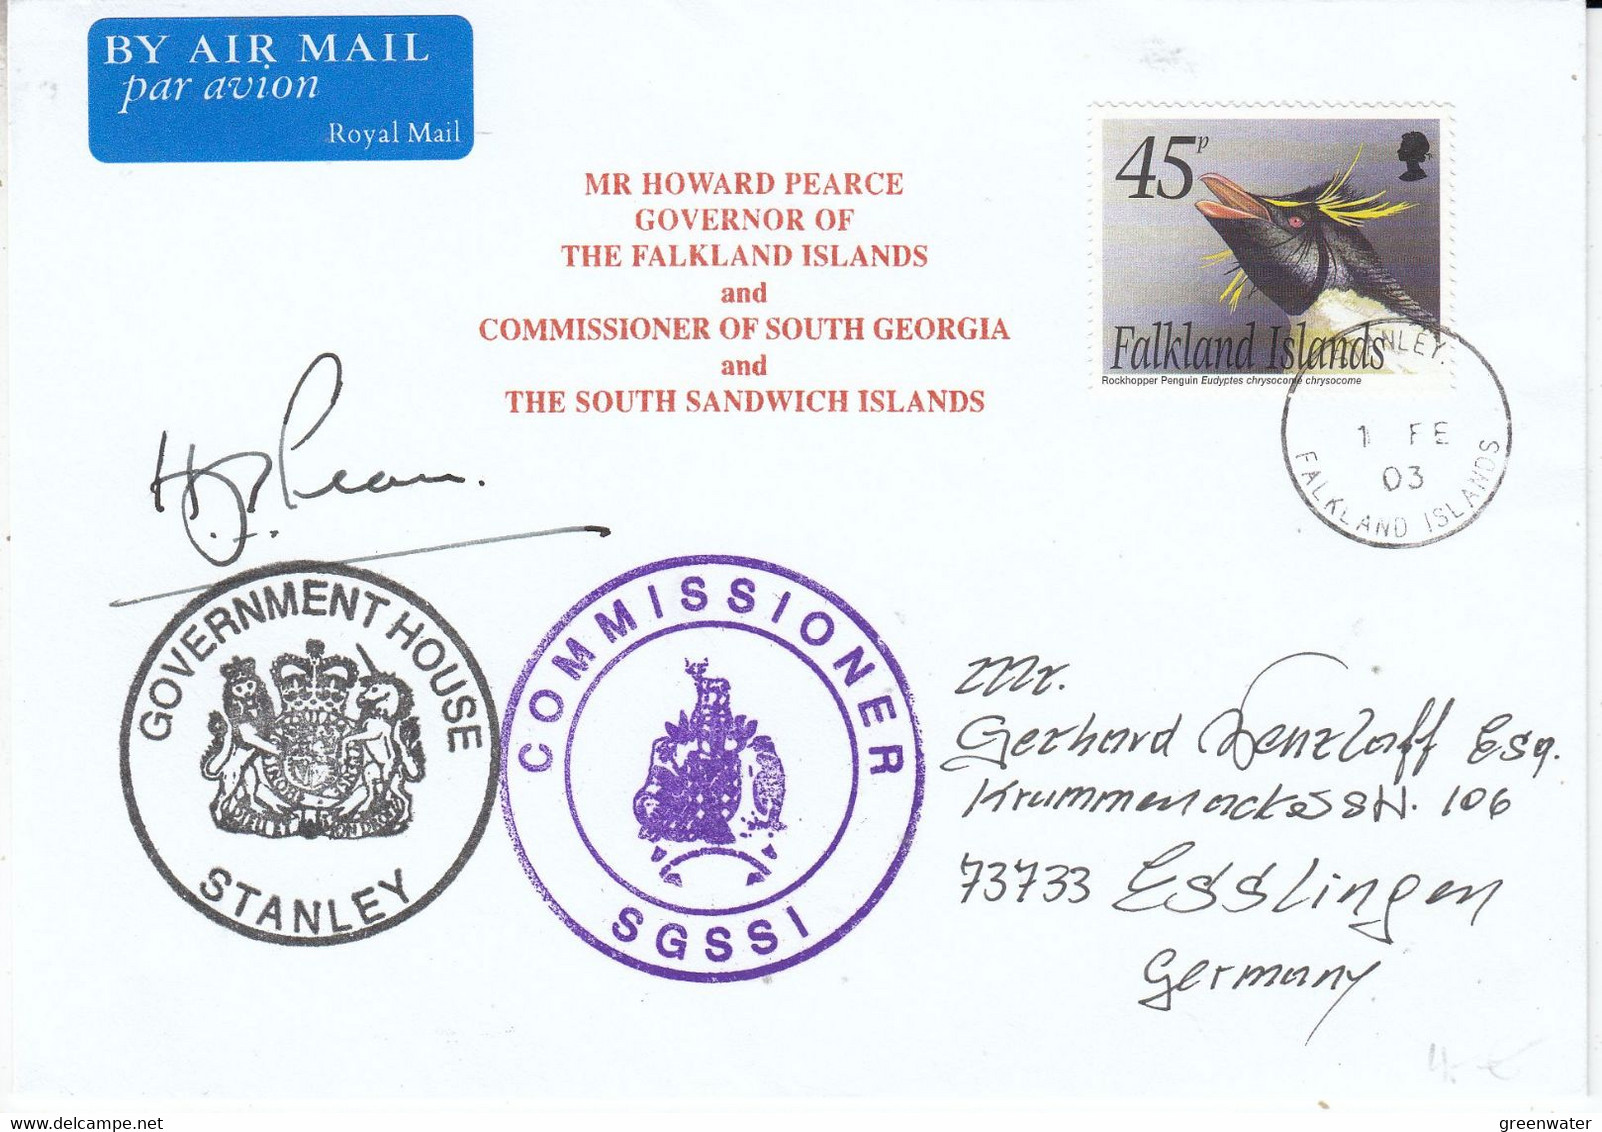 Falkland Islands 2003 Cover Send By Howard Pearce Governor Of The Falkland Islands, Signed CA Stanley 1 FE 2003 (FI206) - Falklandeilanden